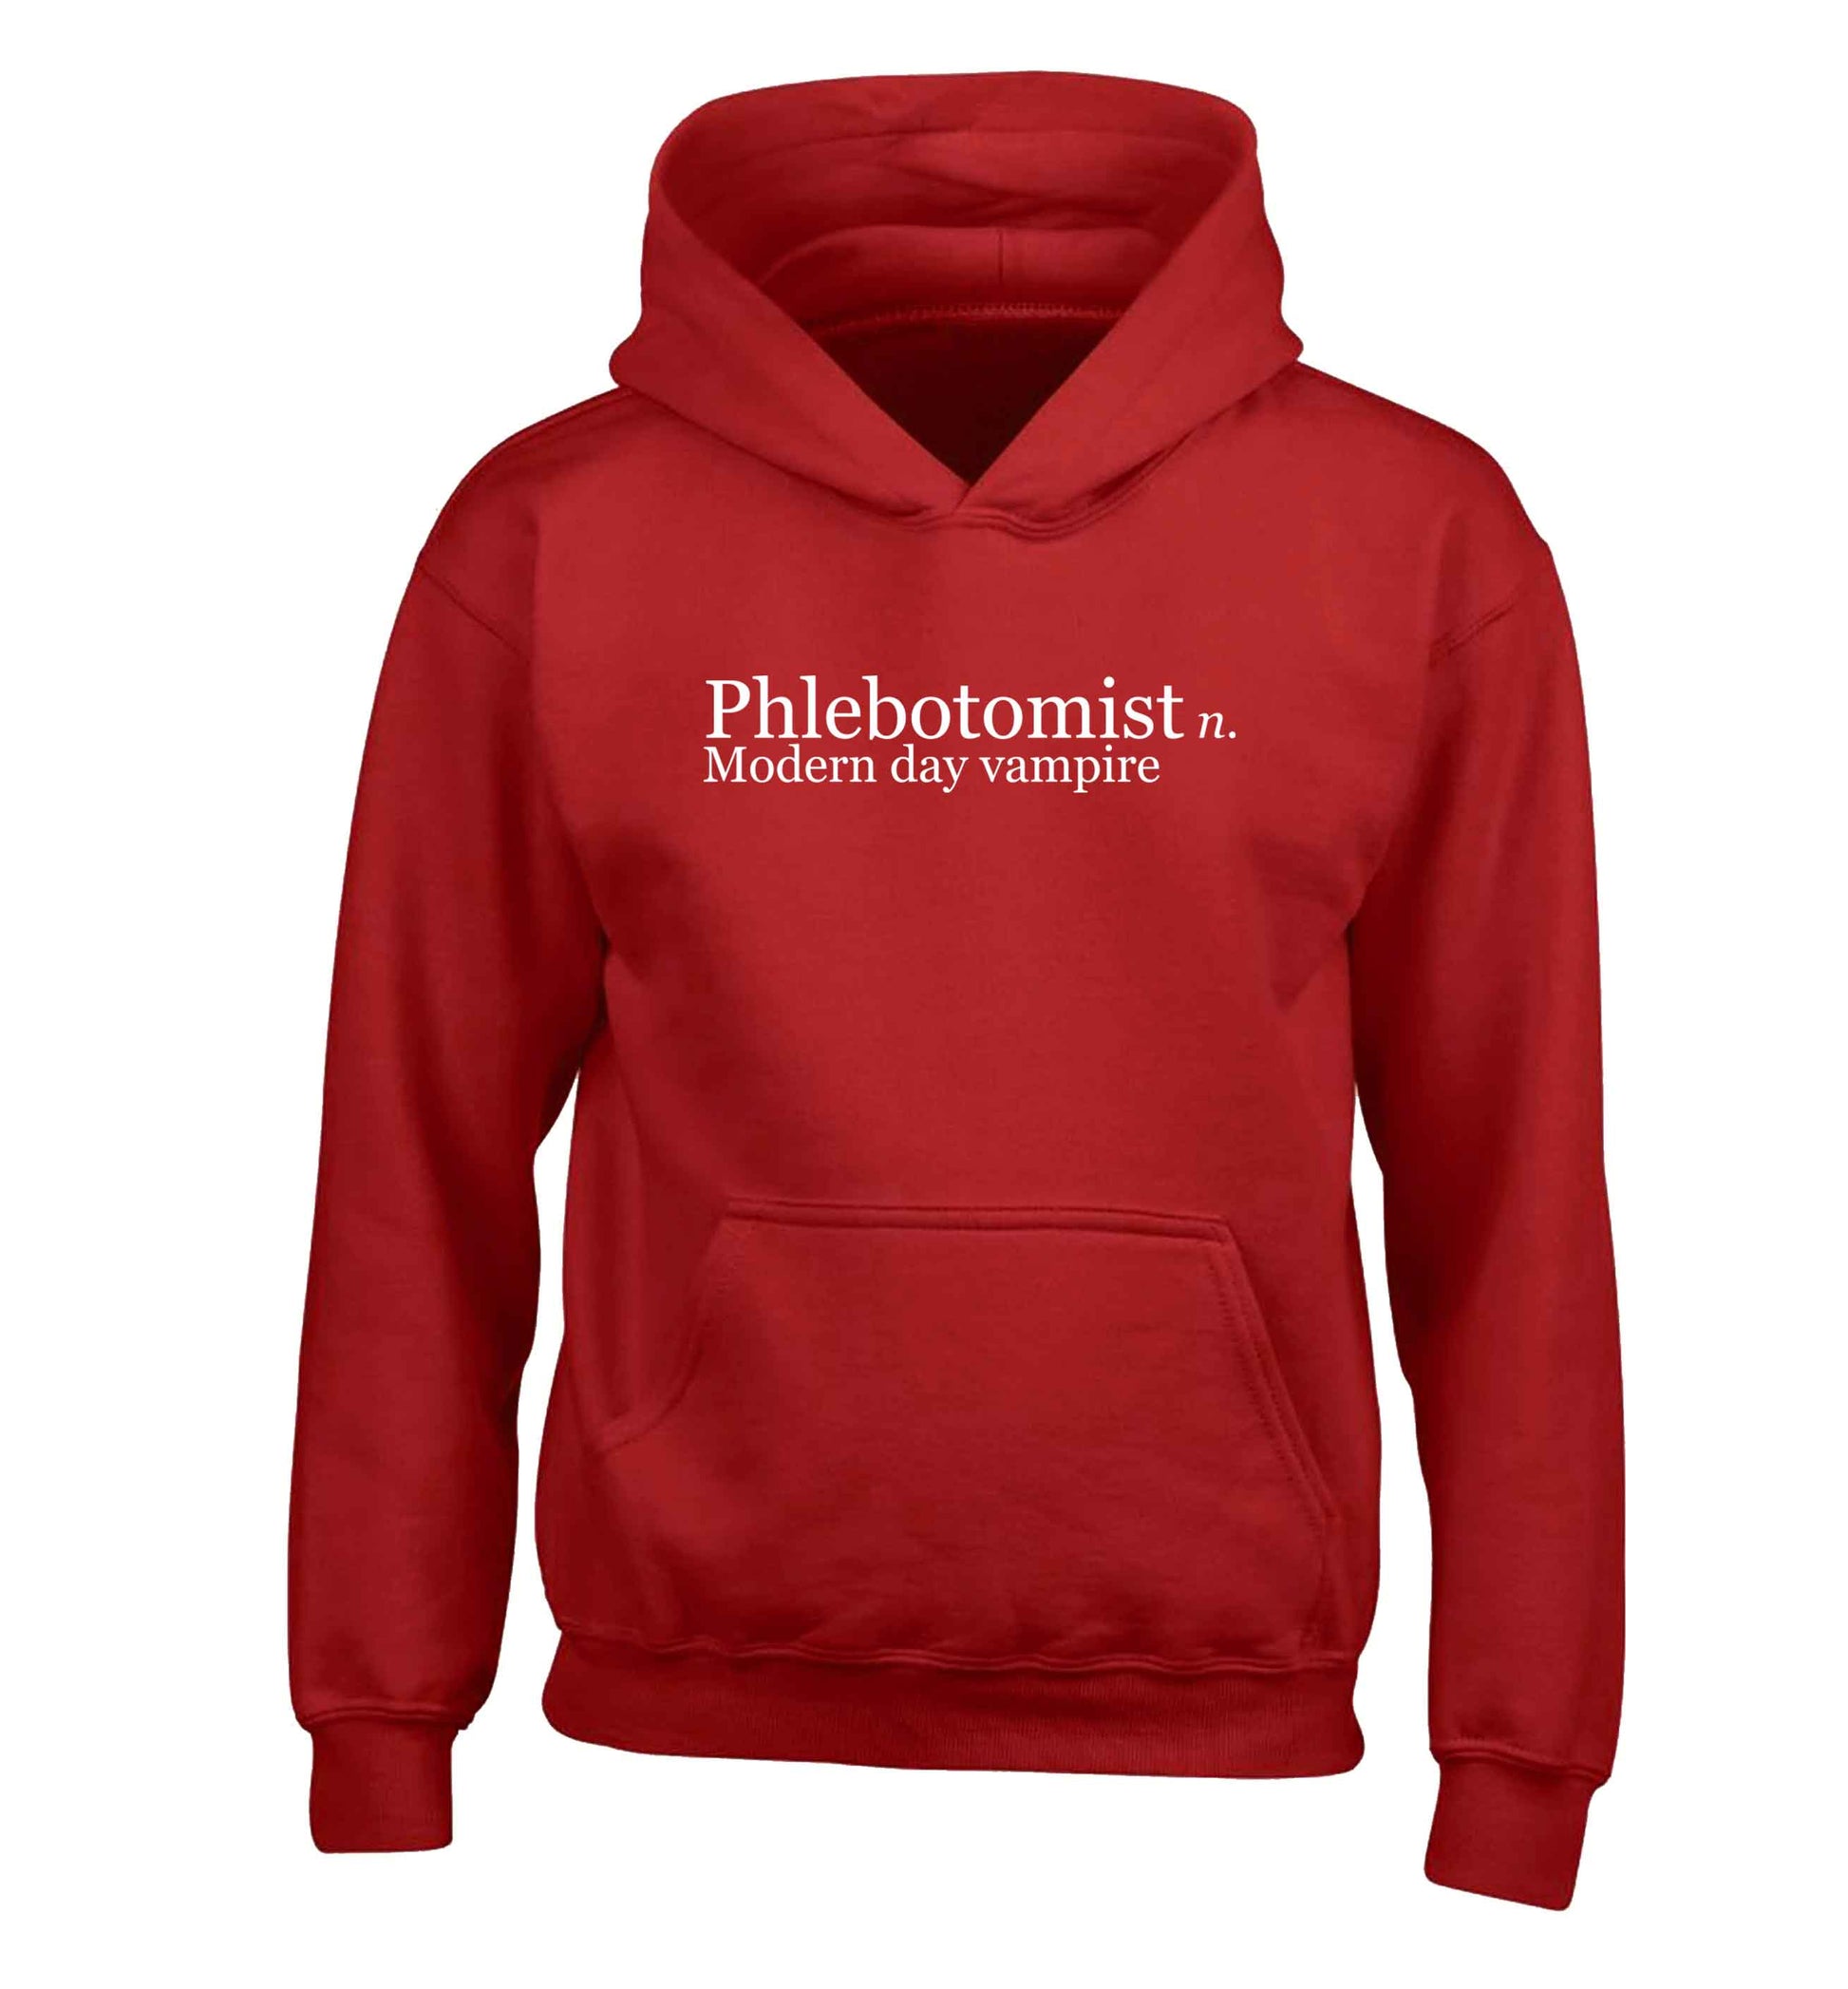 Phlebotomist - Modern day vampire children's red hoodie 12-13 Years